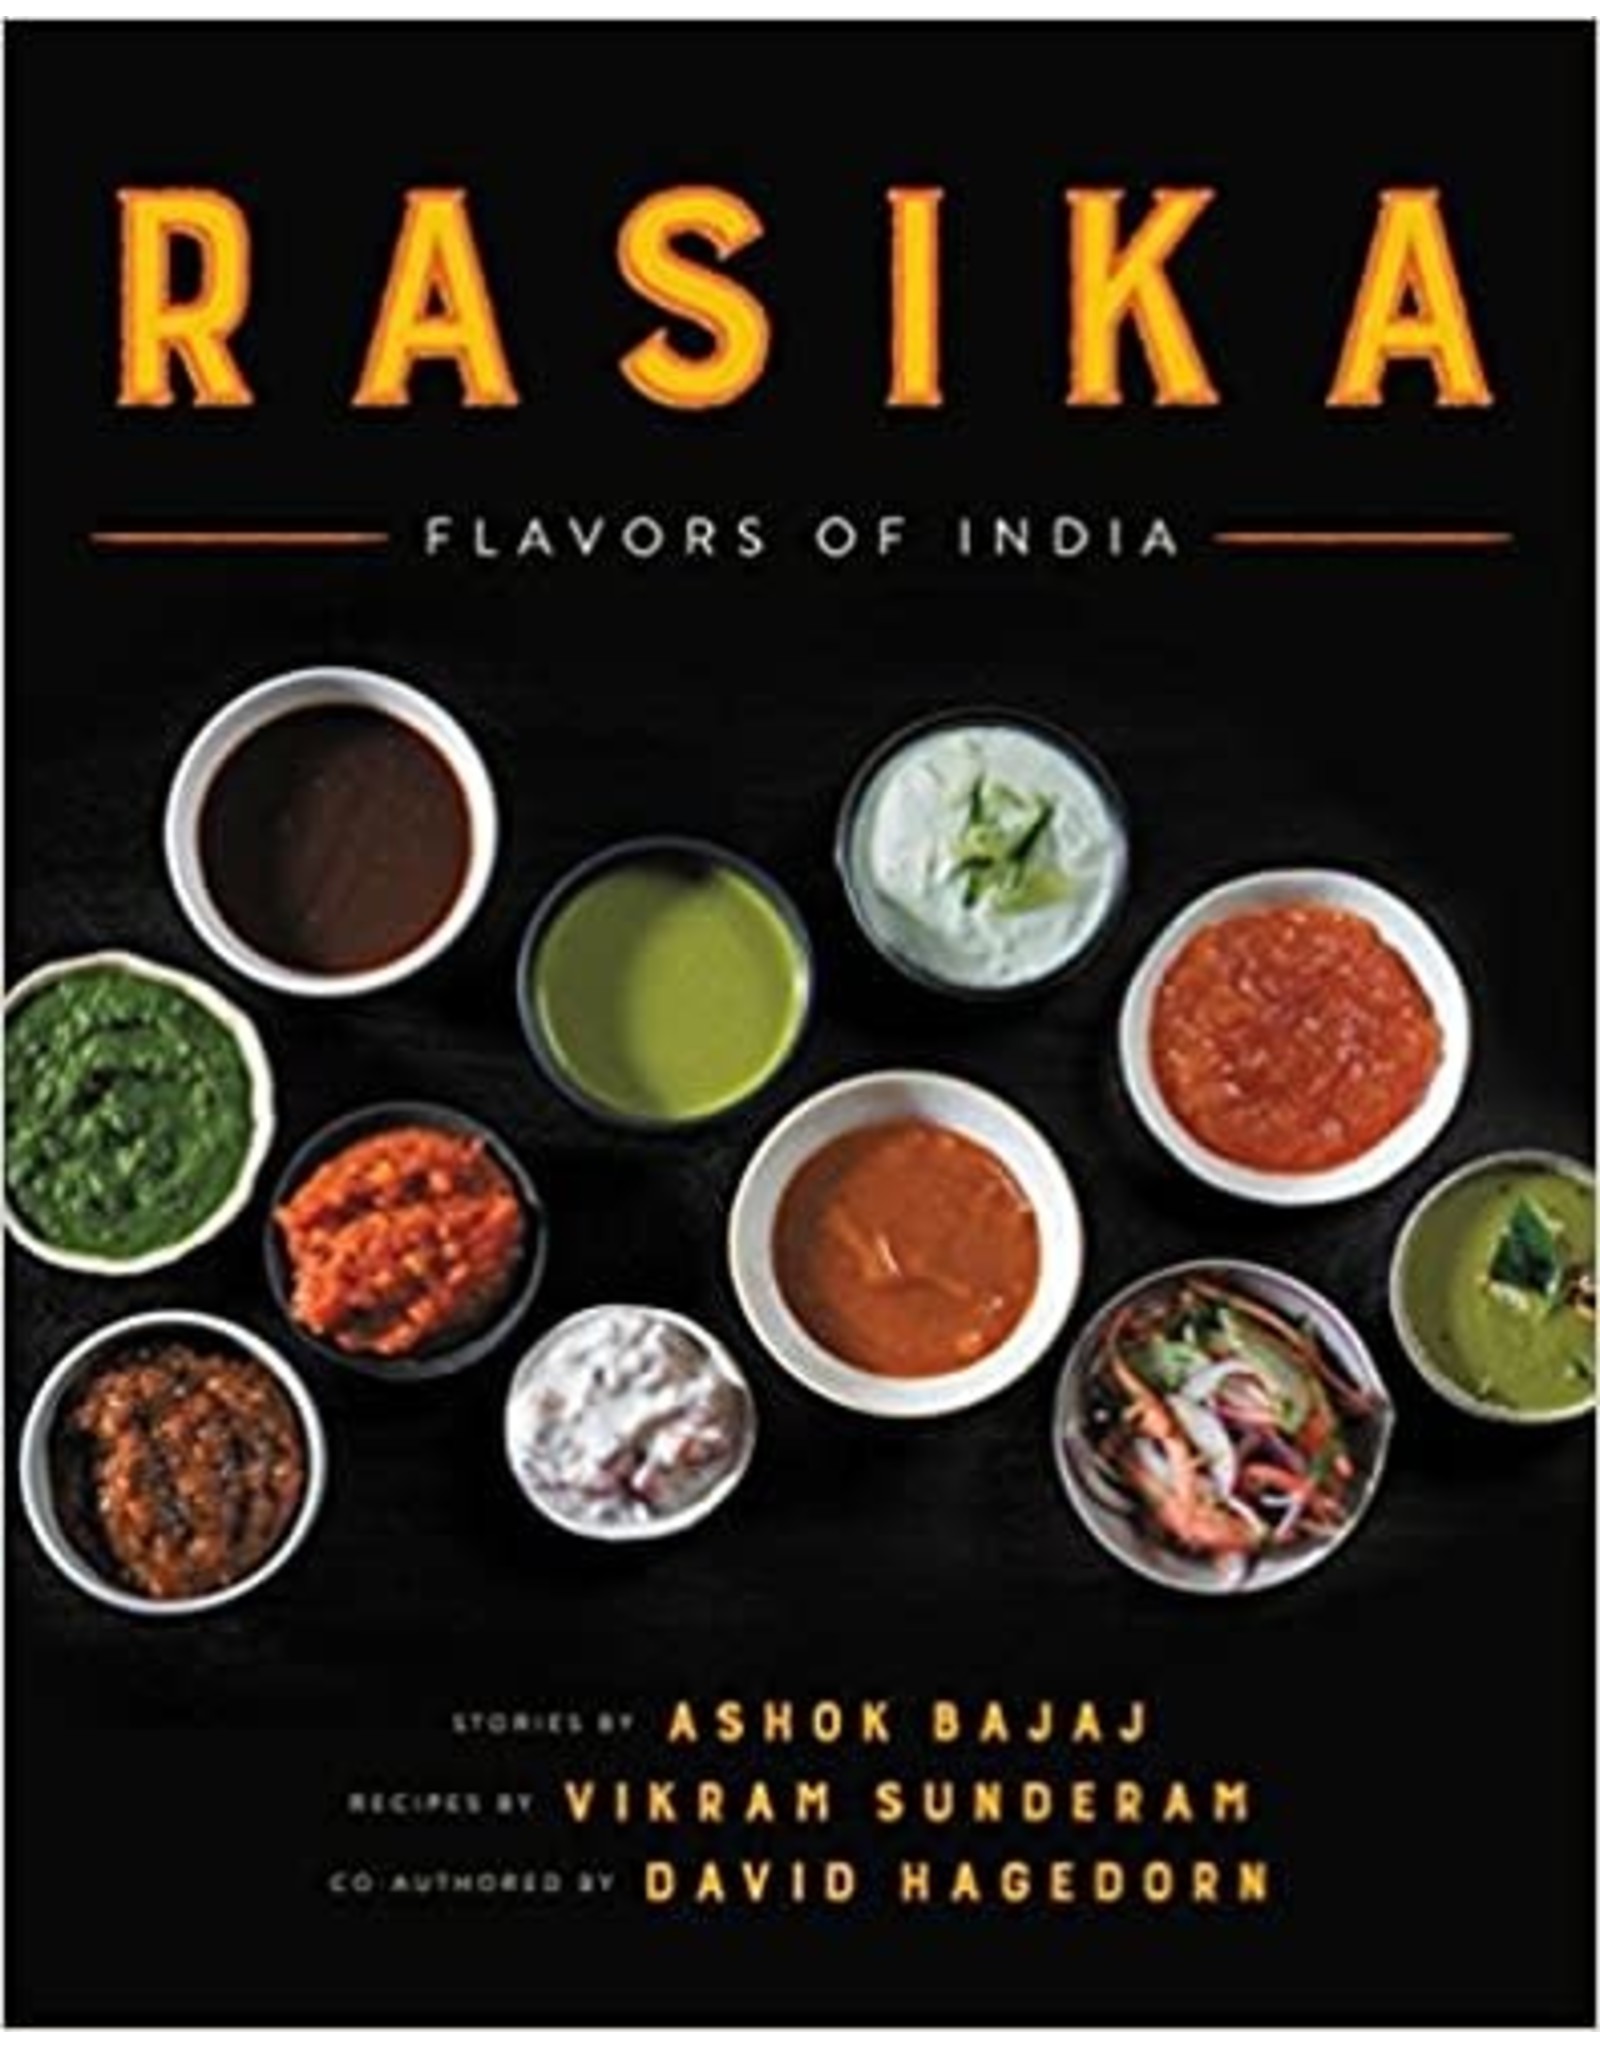 Trade roots Rasika Cook Book